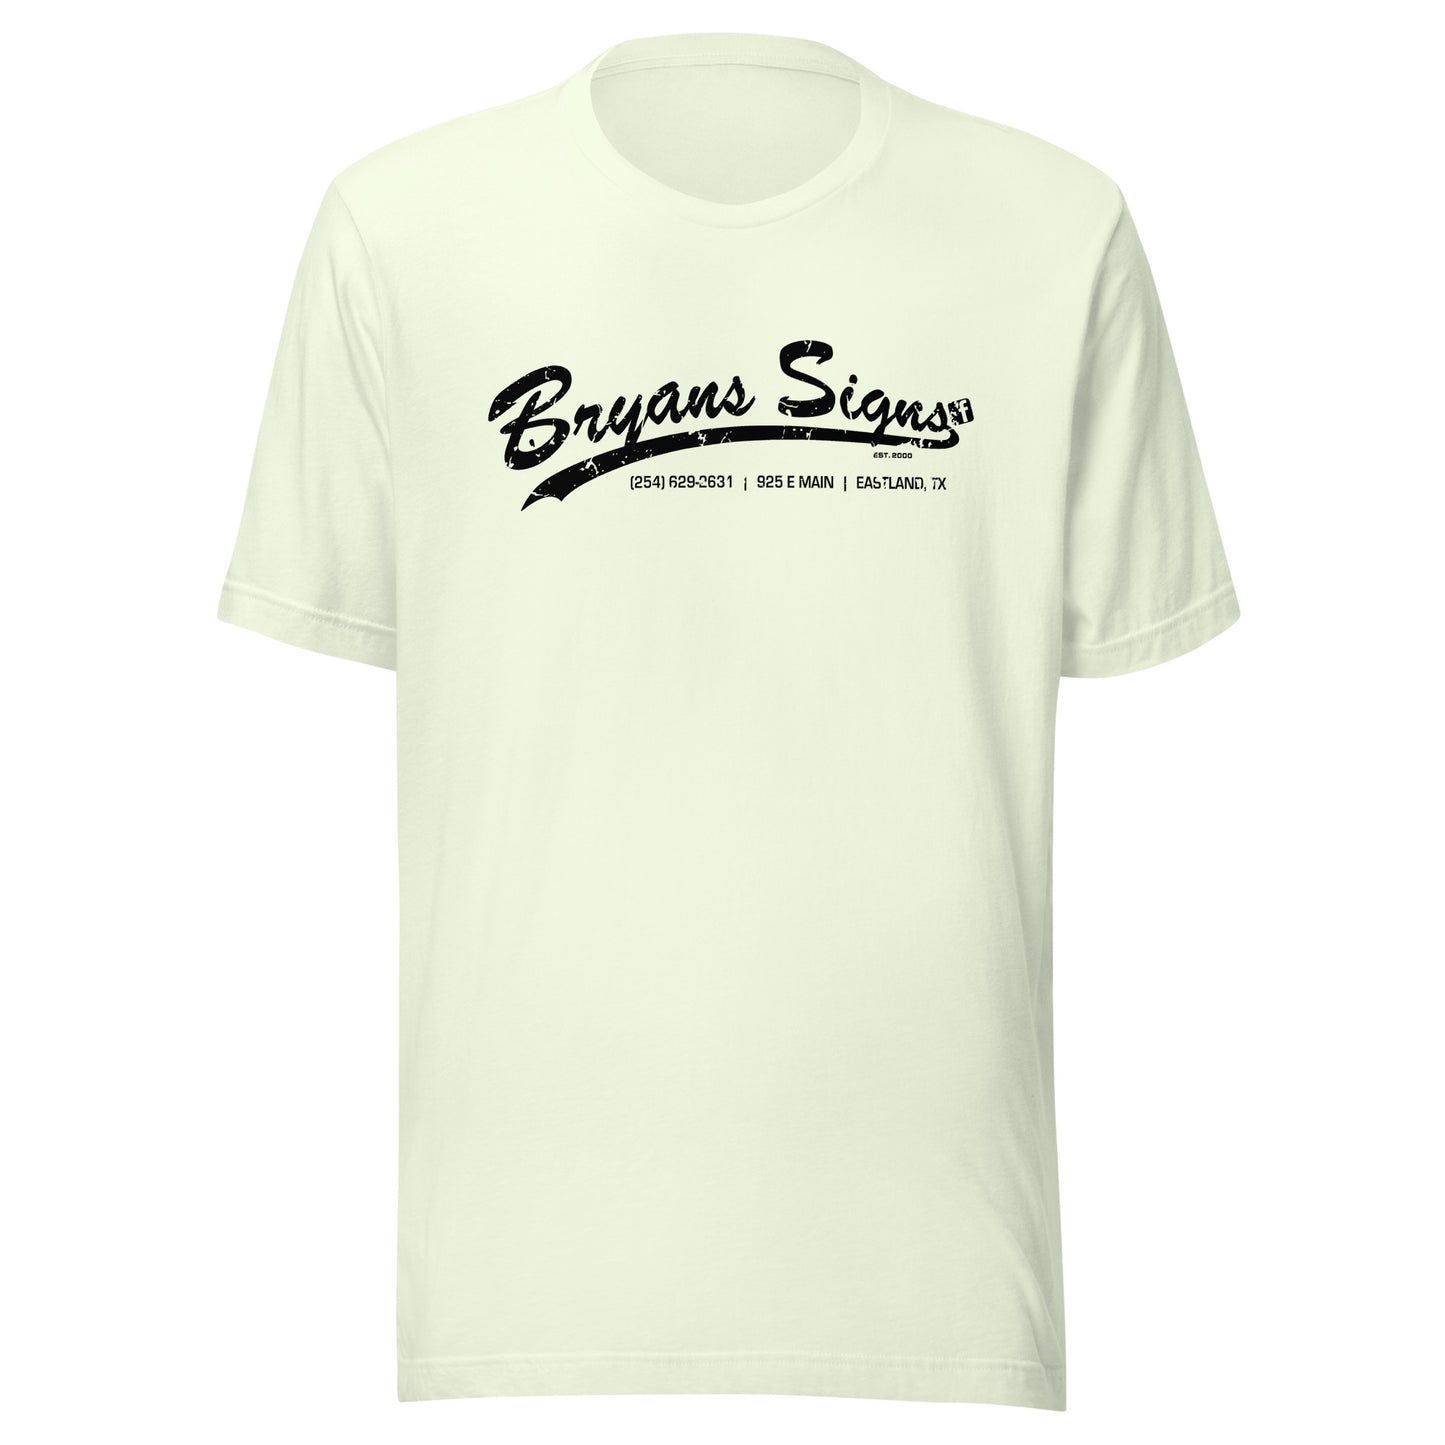 Bryan's Signs T-Shirt